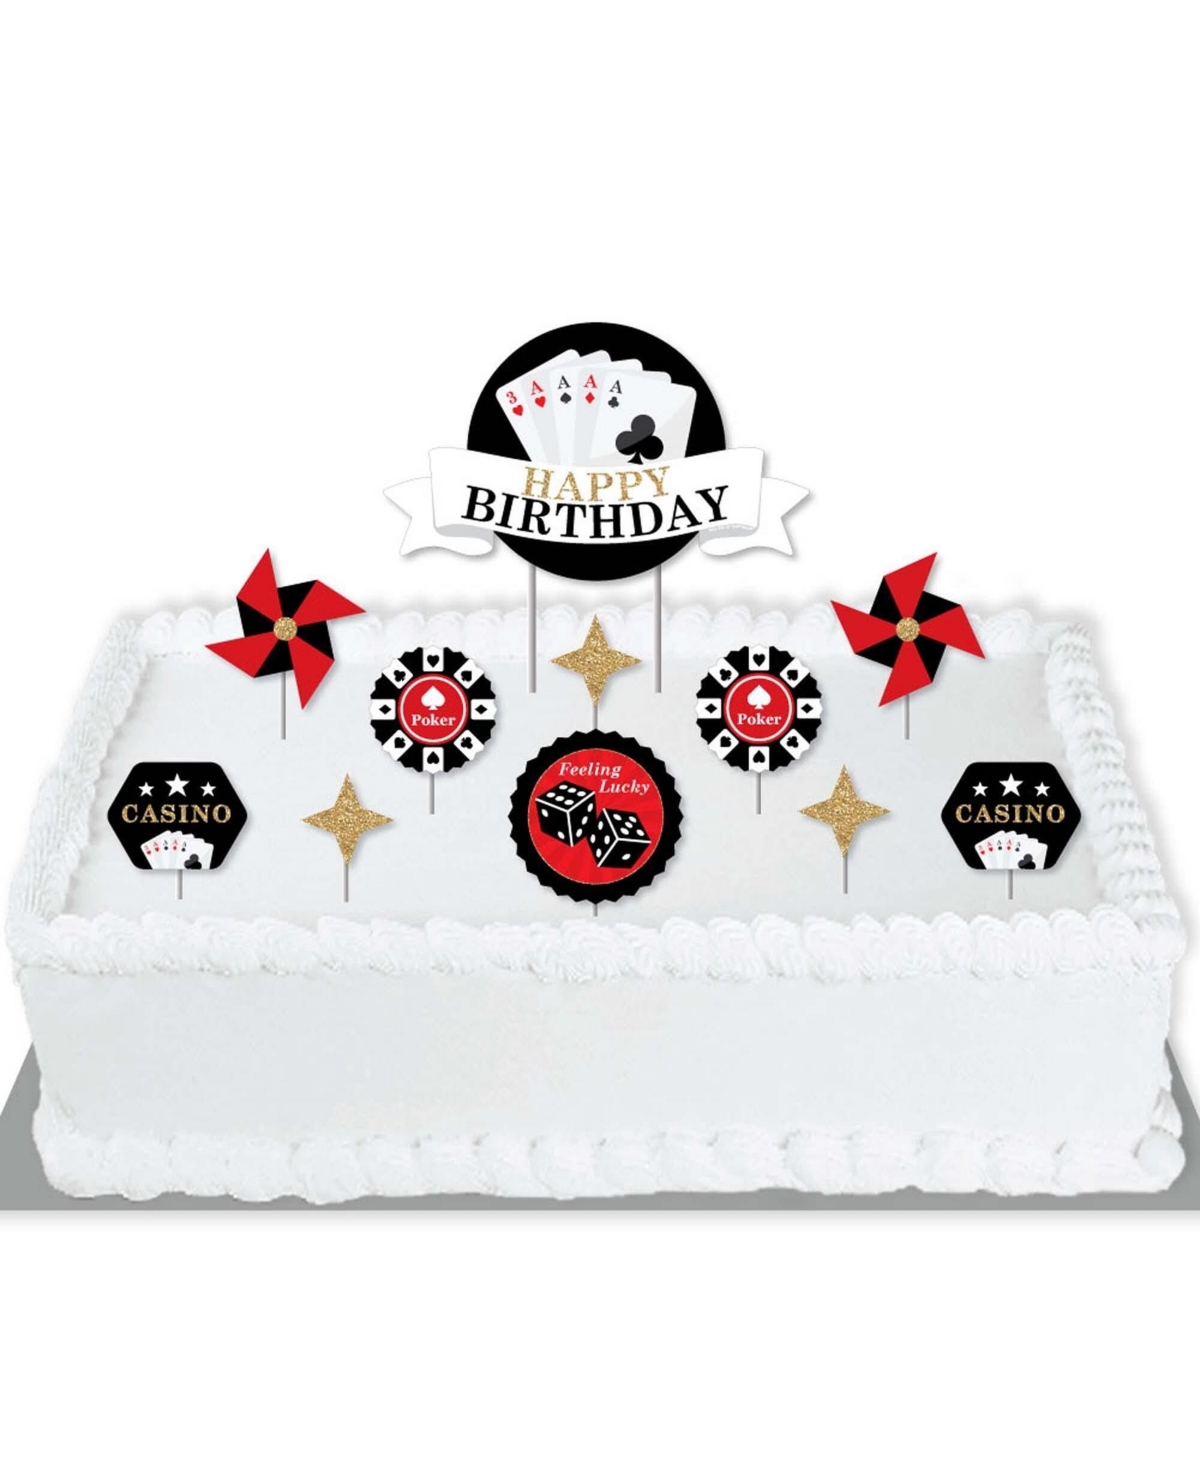 Las Vegas - Casino Birthday Party Cake Decorating Kit Cake Topper Set 11 Pieces